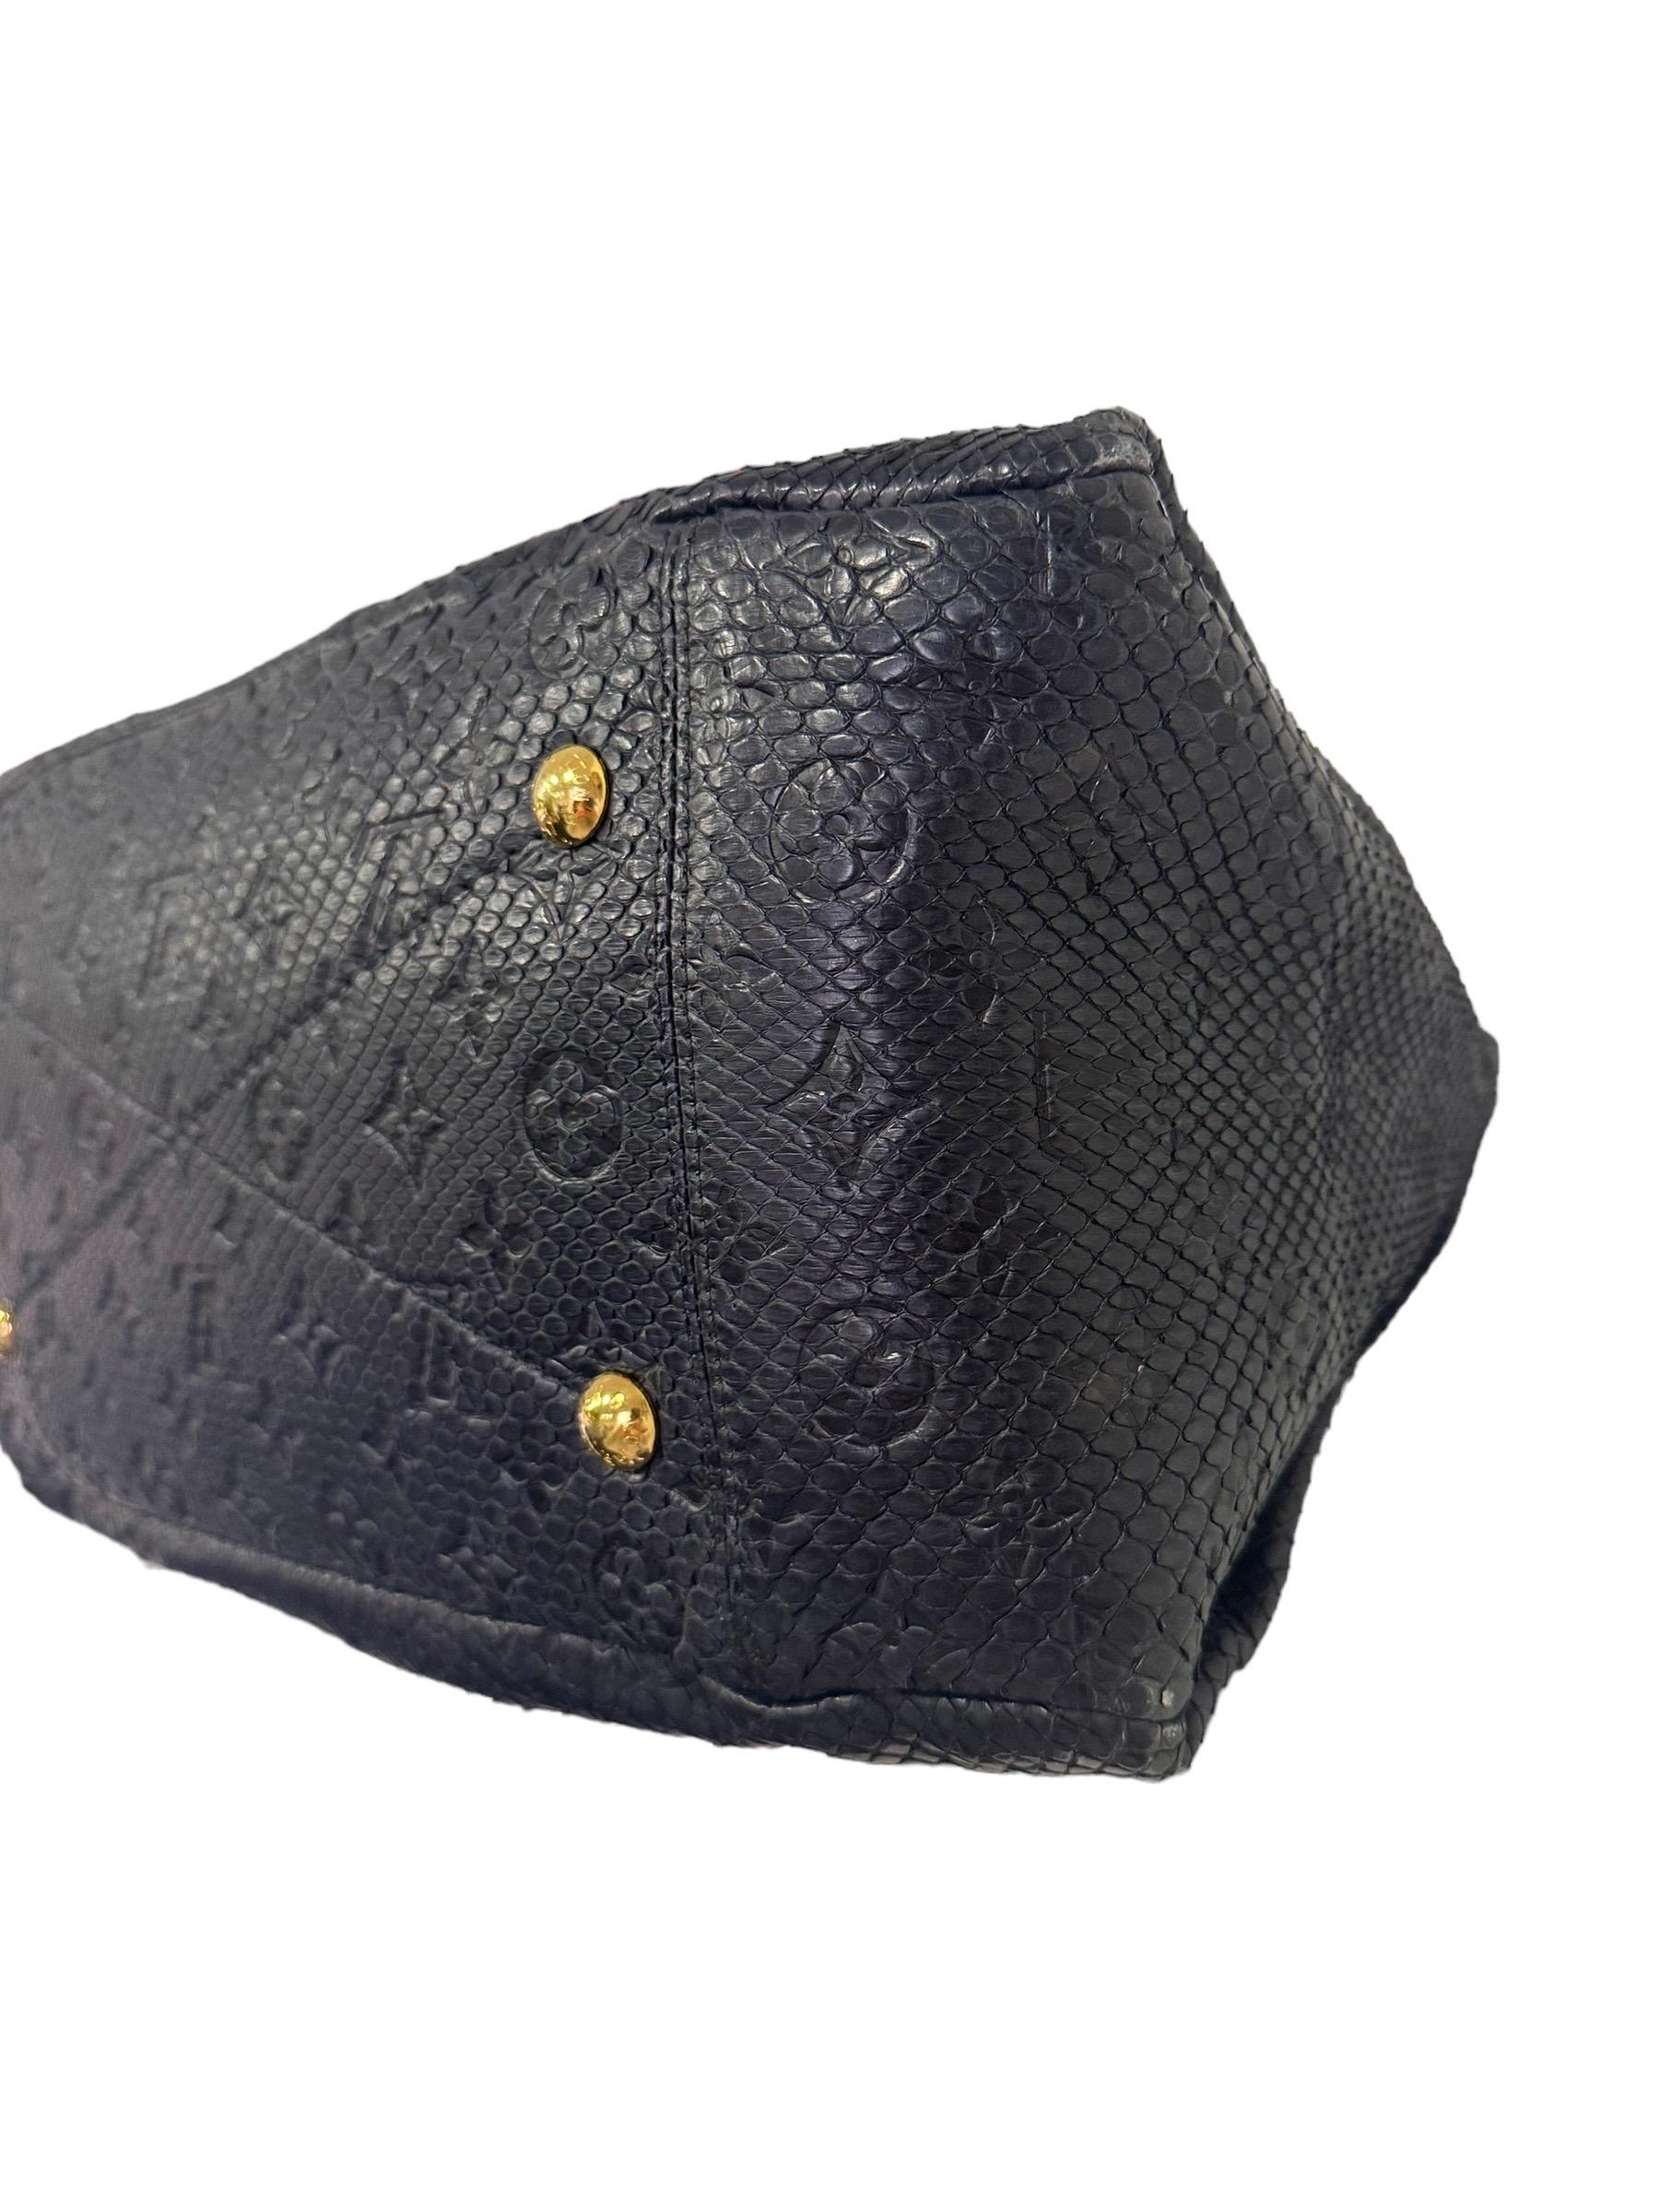 Louis Vuitton Artsy GM Blu Leather Top Handle Bag 5